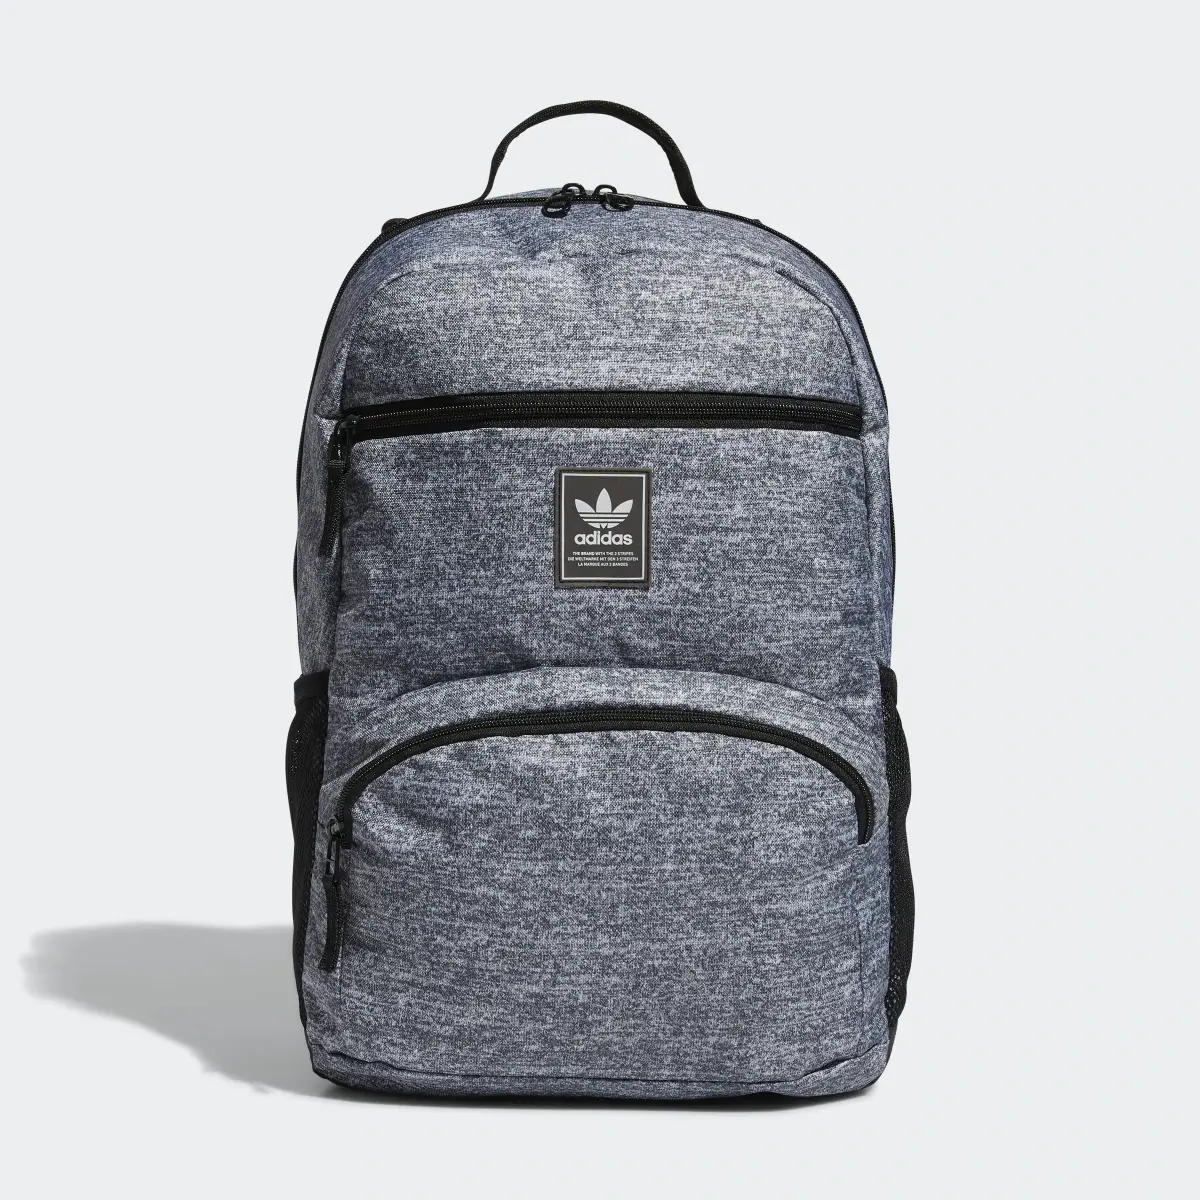 Adidas National Backpack. 2